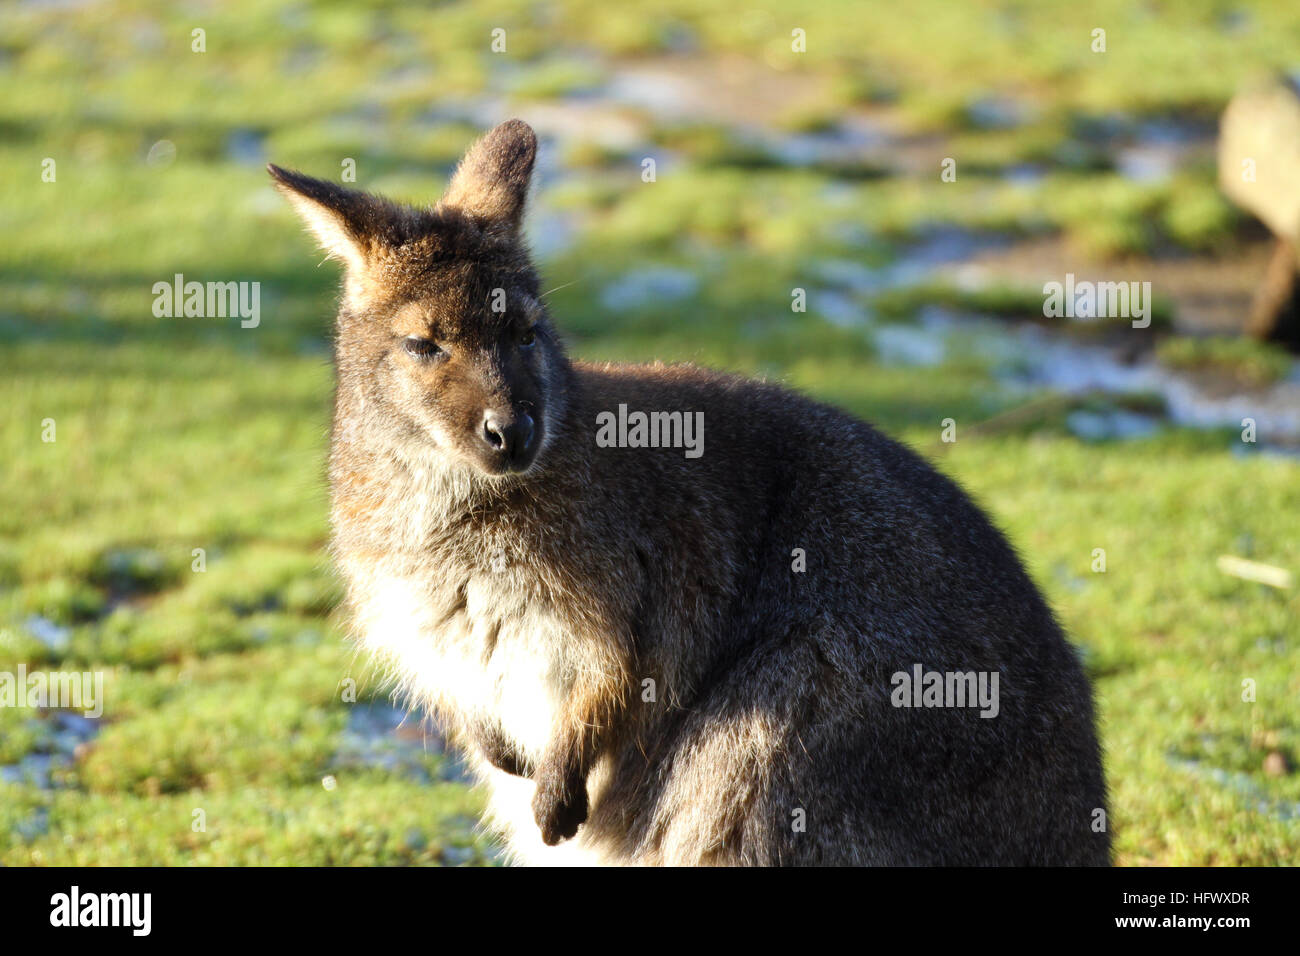 Wallaby at Yorkshire Wildlife park taken 29/12/16 Stock Photo